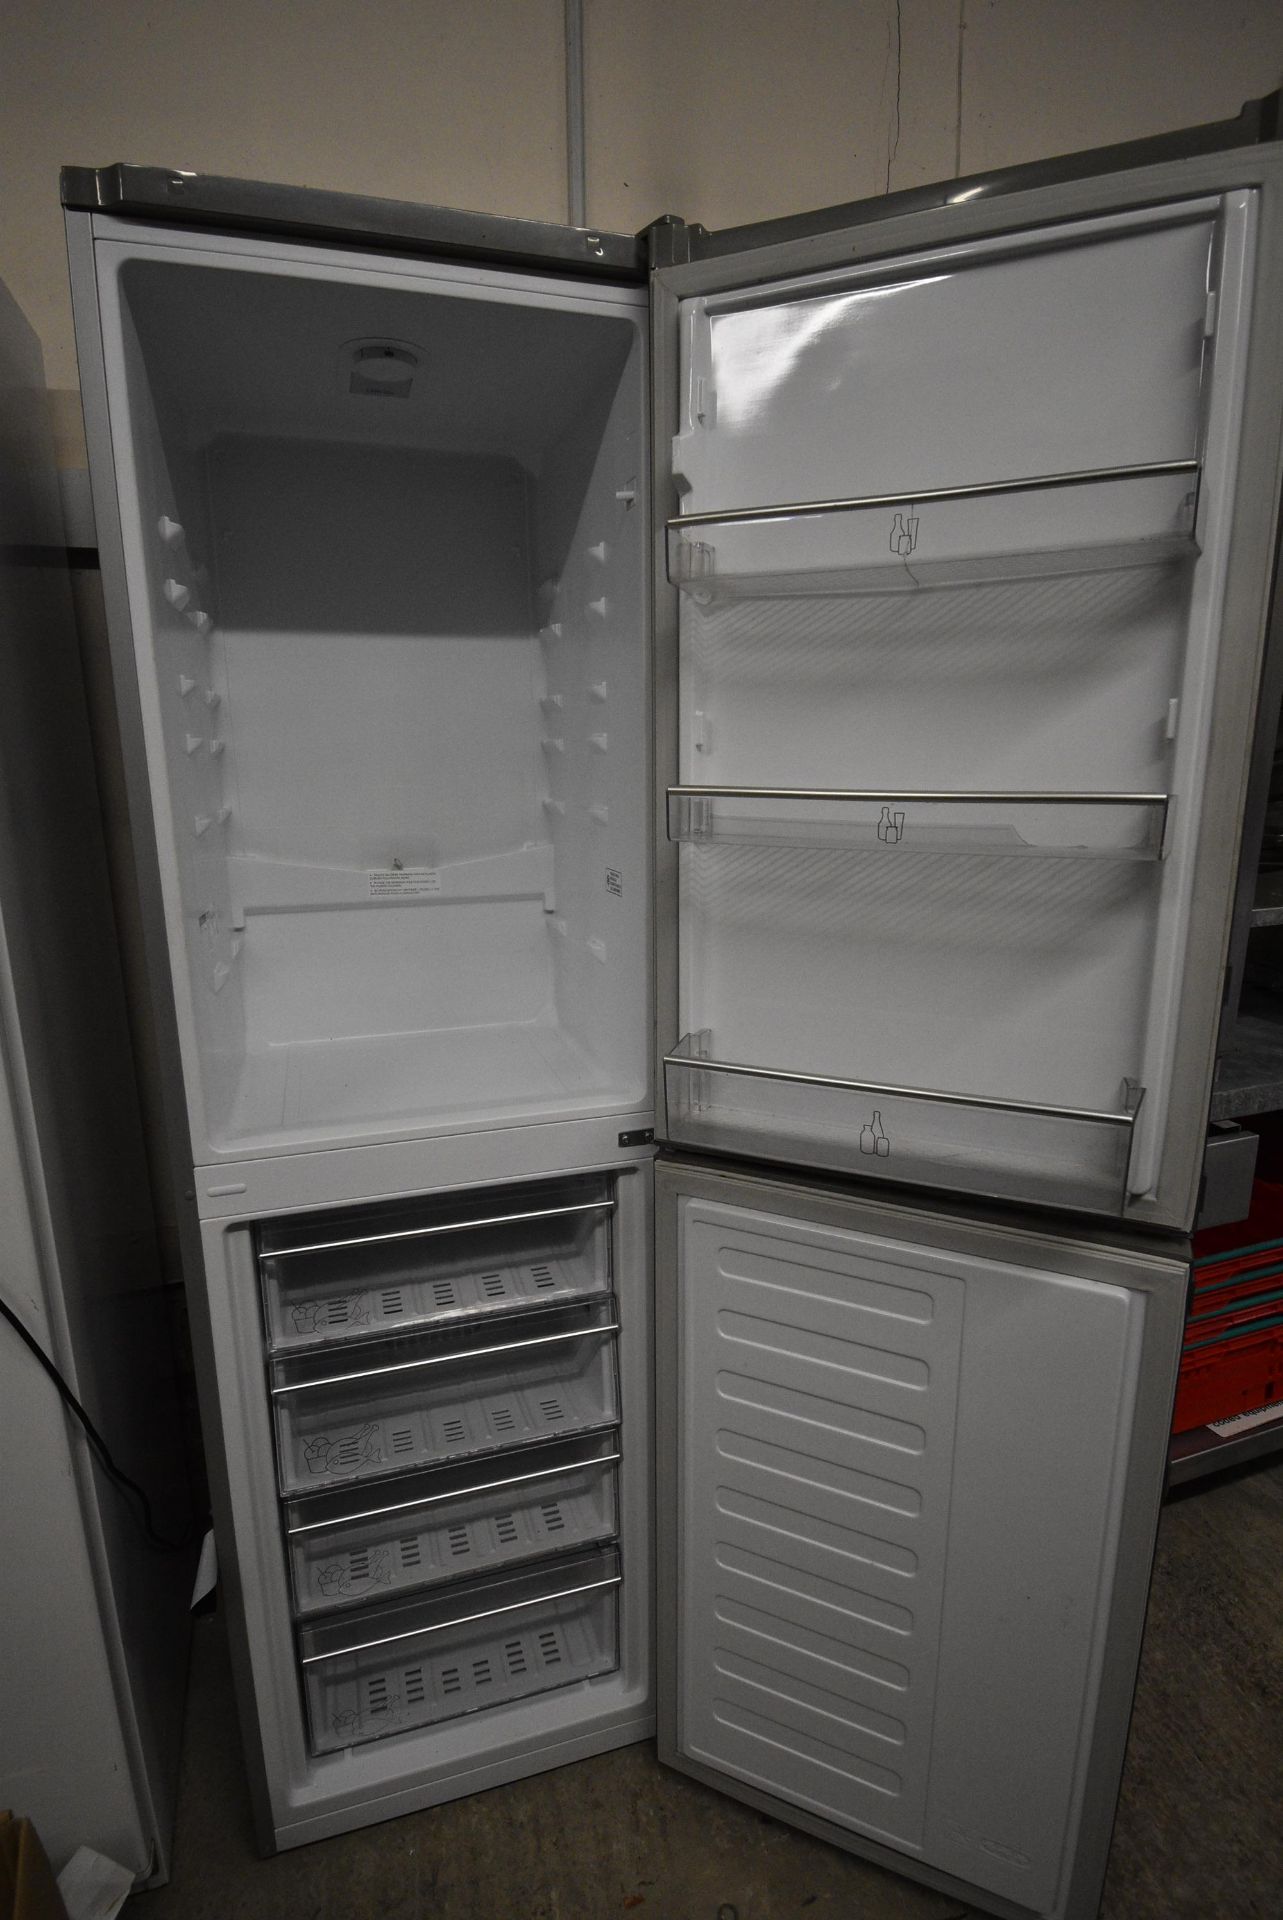 Grundig GKF15810N Upright Refrigerator - Image 2 of 4